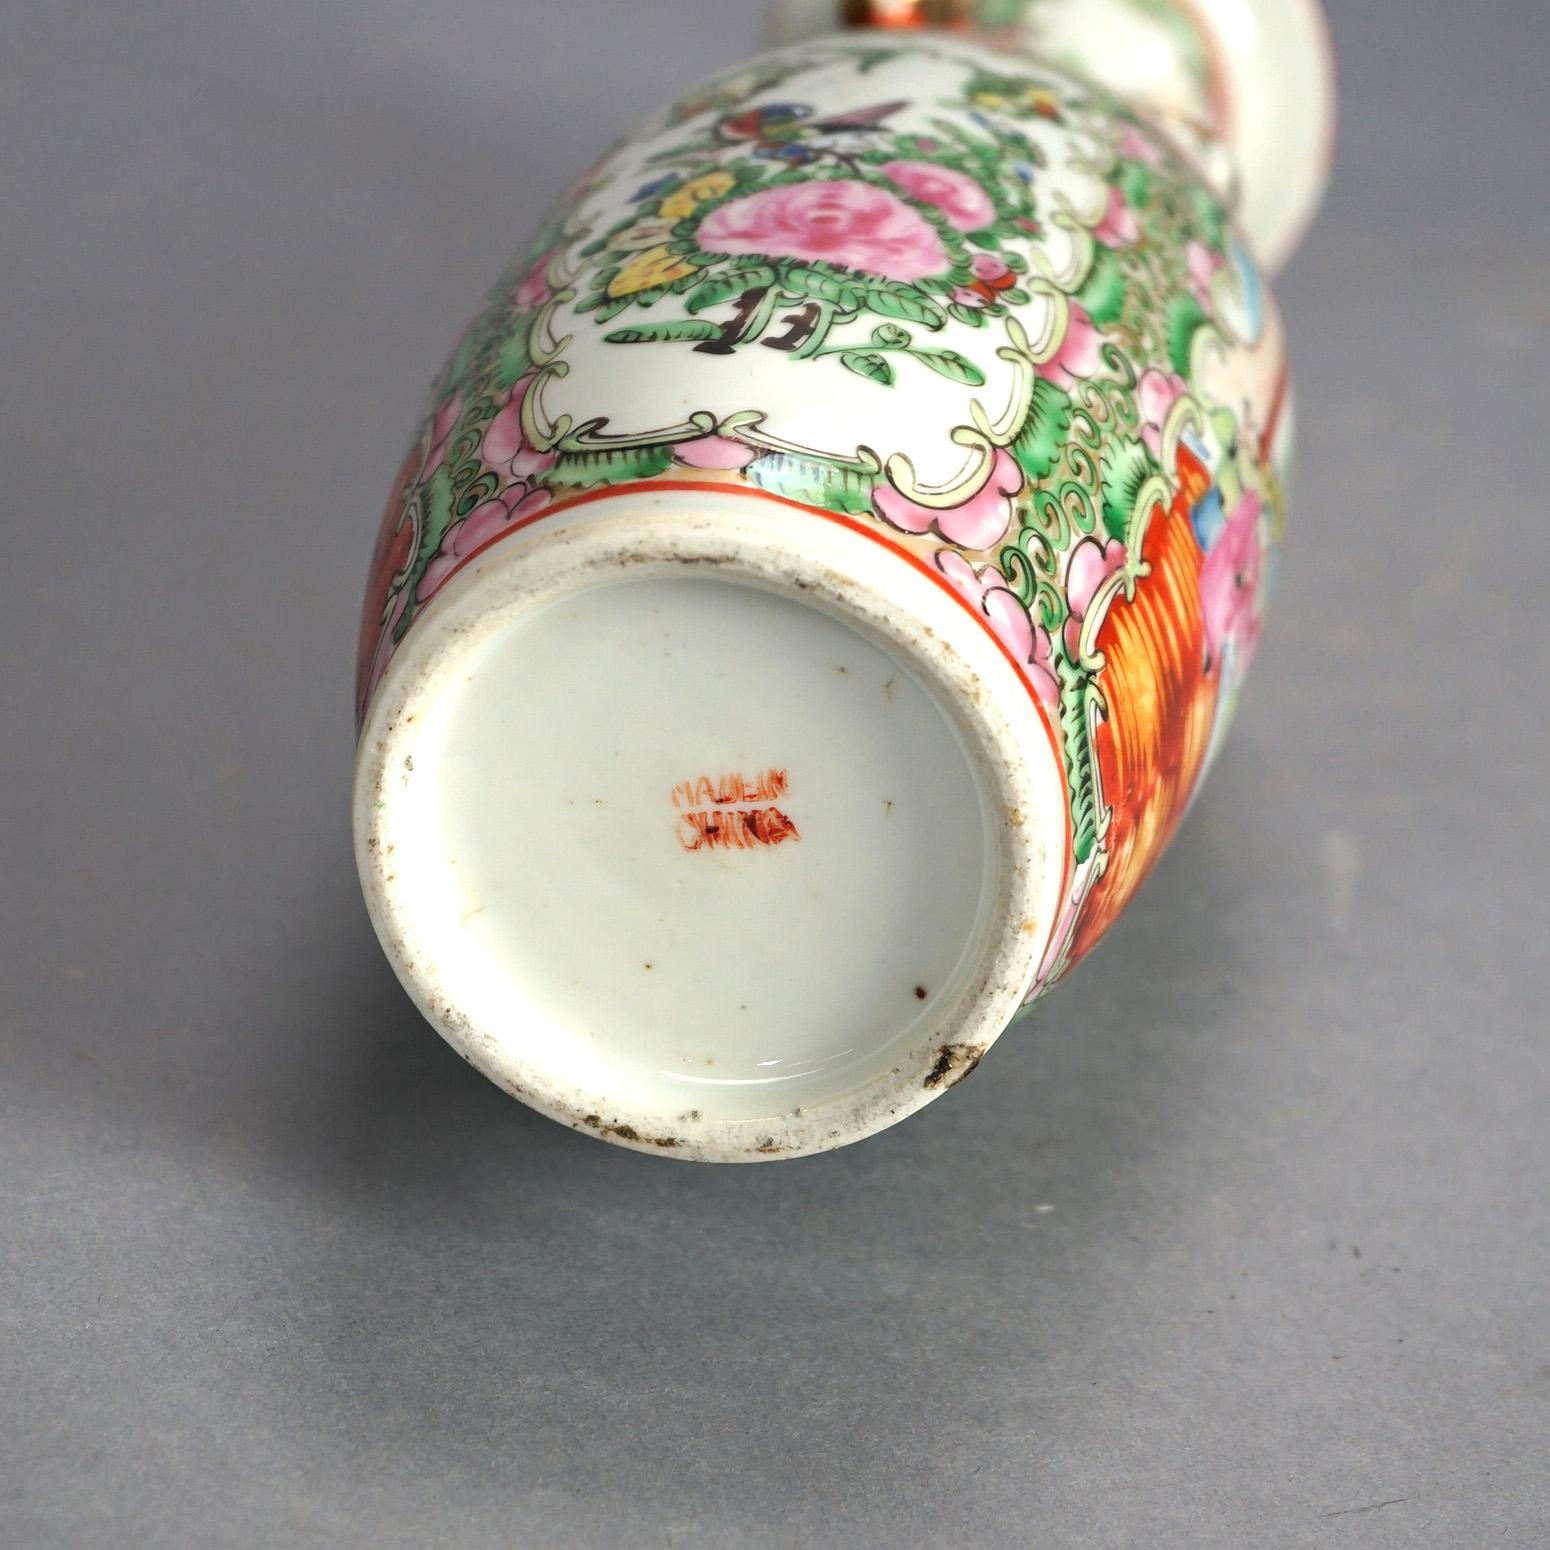 Antique Chinese Rose Medallion Porcelain Double Handled Vase c1900 For Sale 3